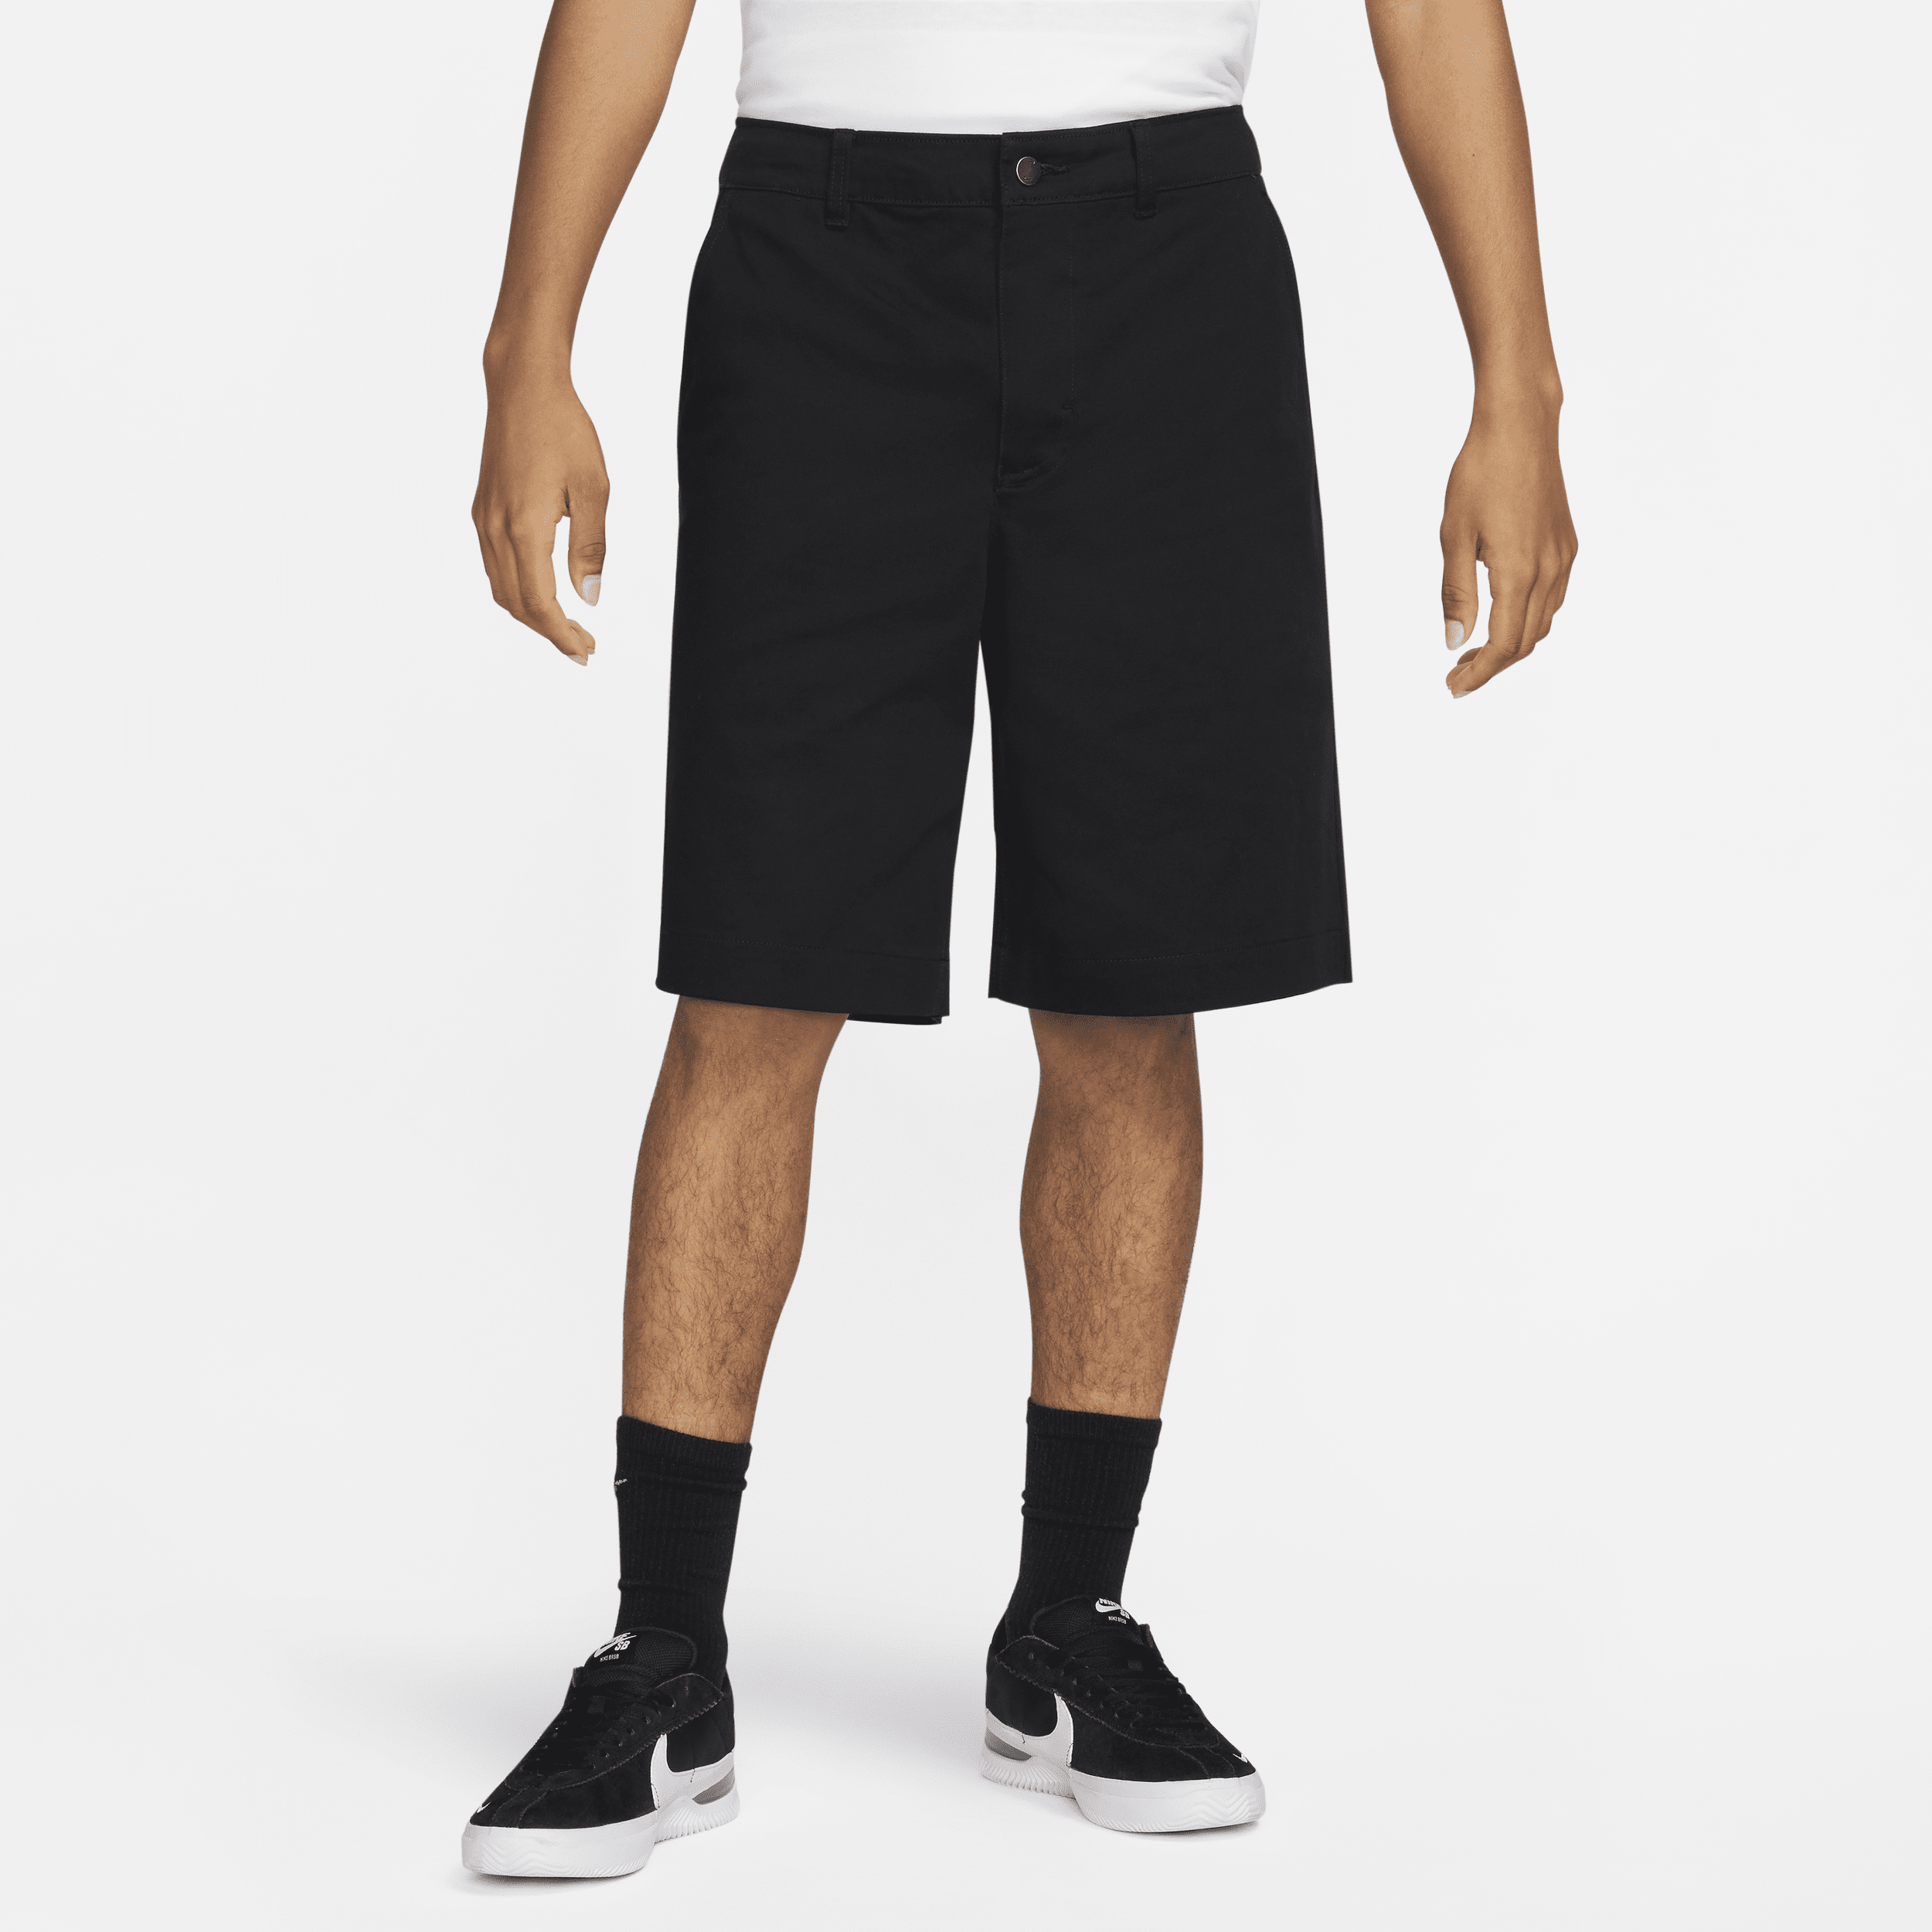 Nike SB Pantalón corto de skateboard El Chino - Hombre - Negro